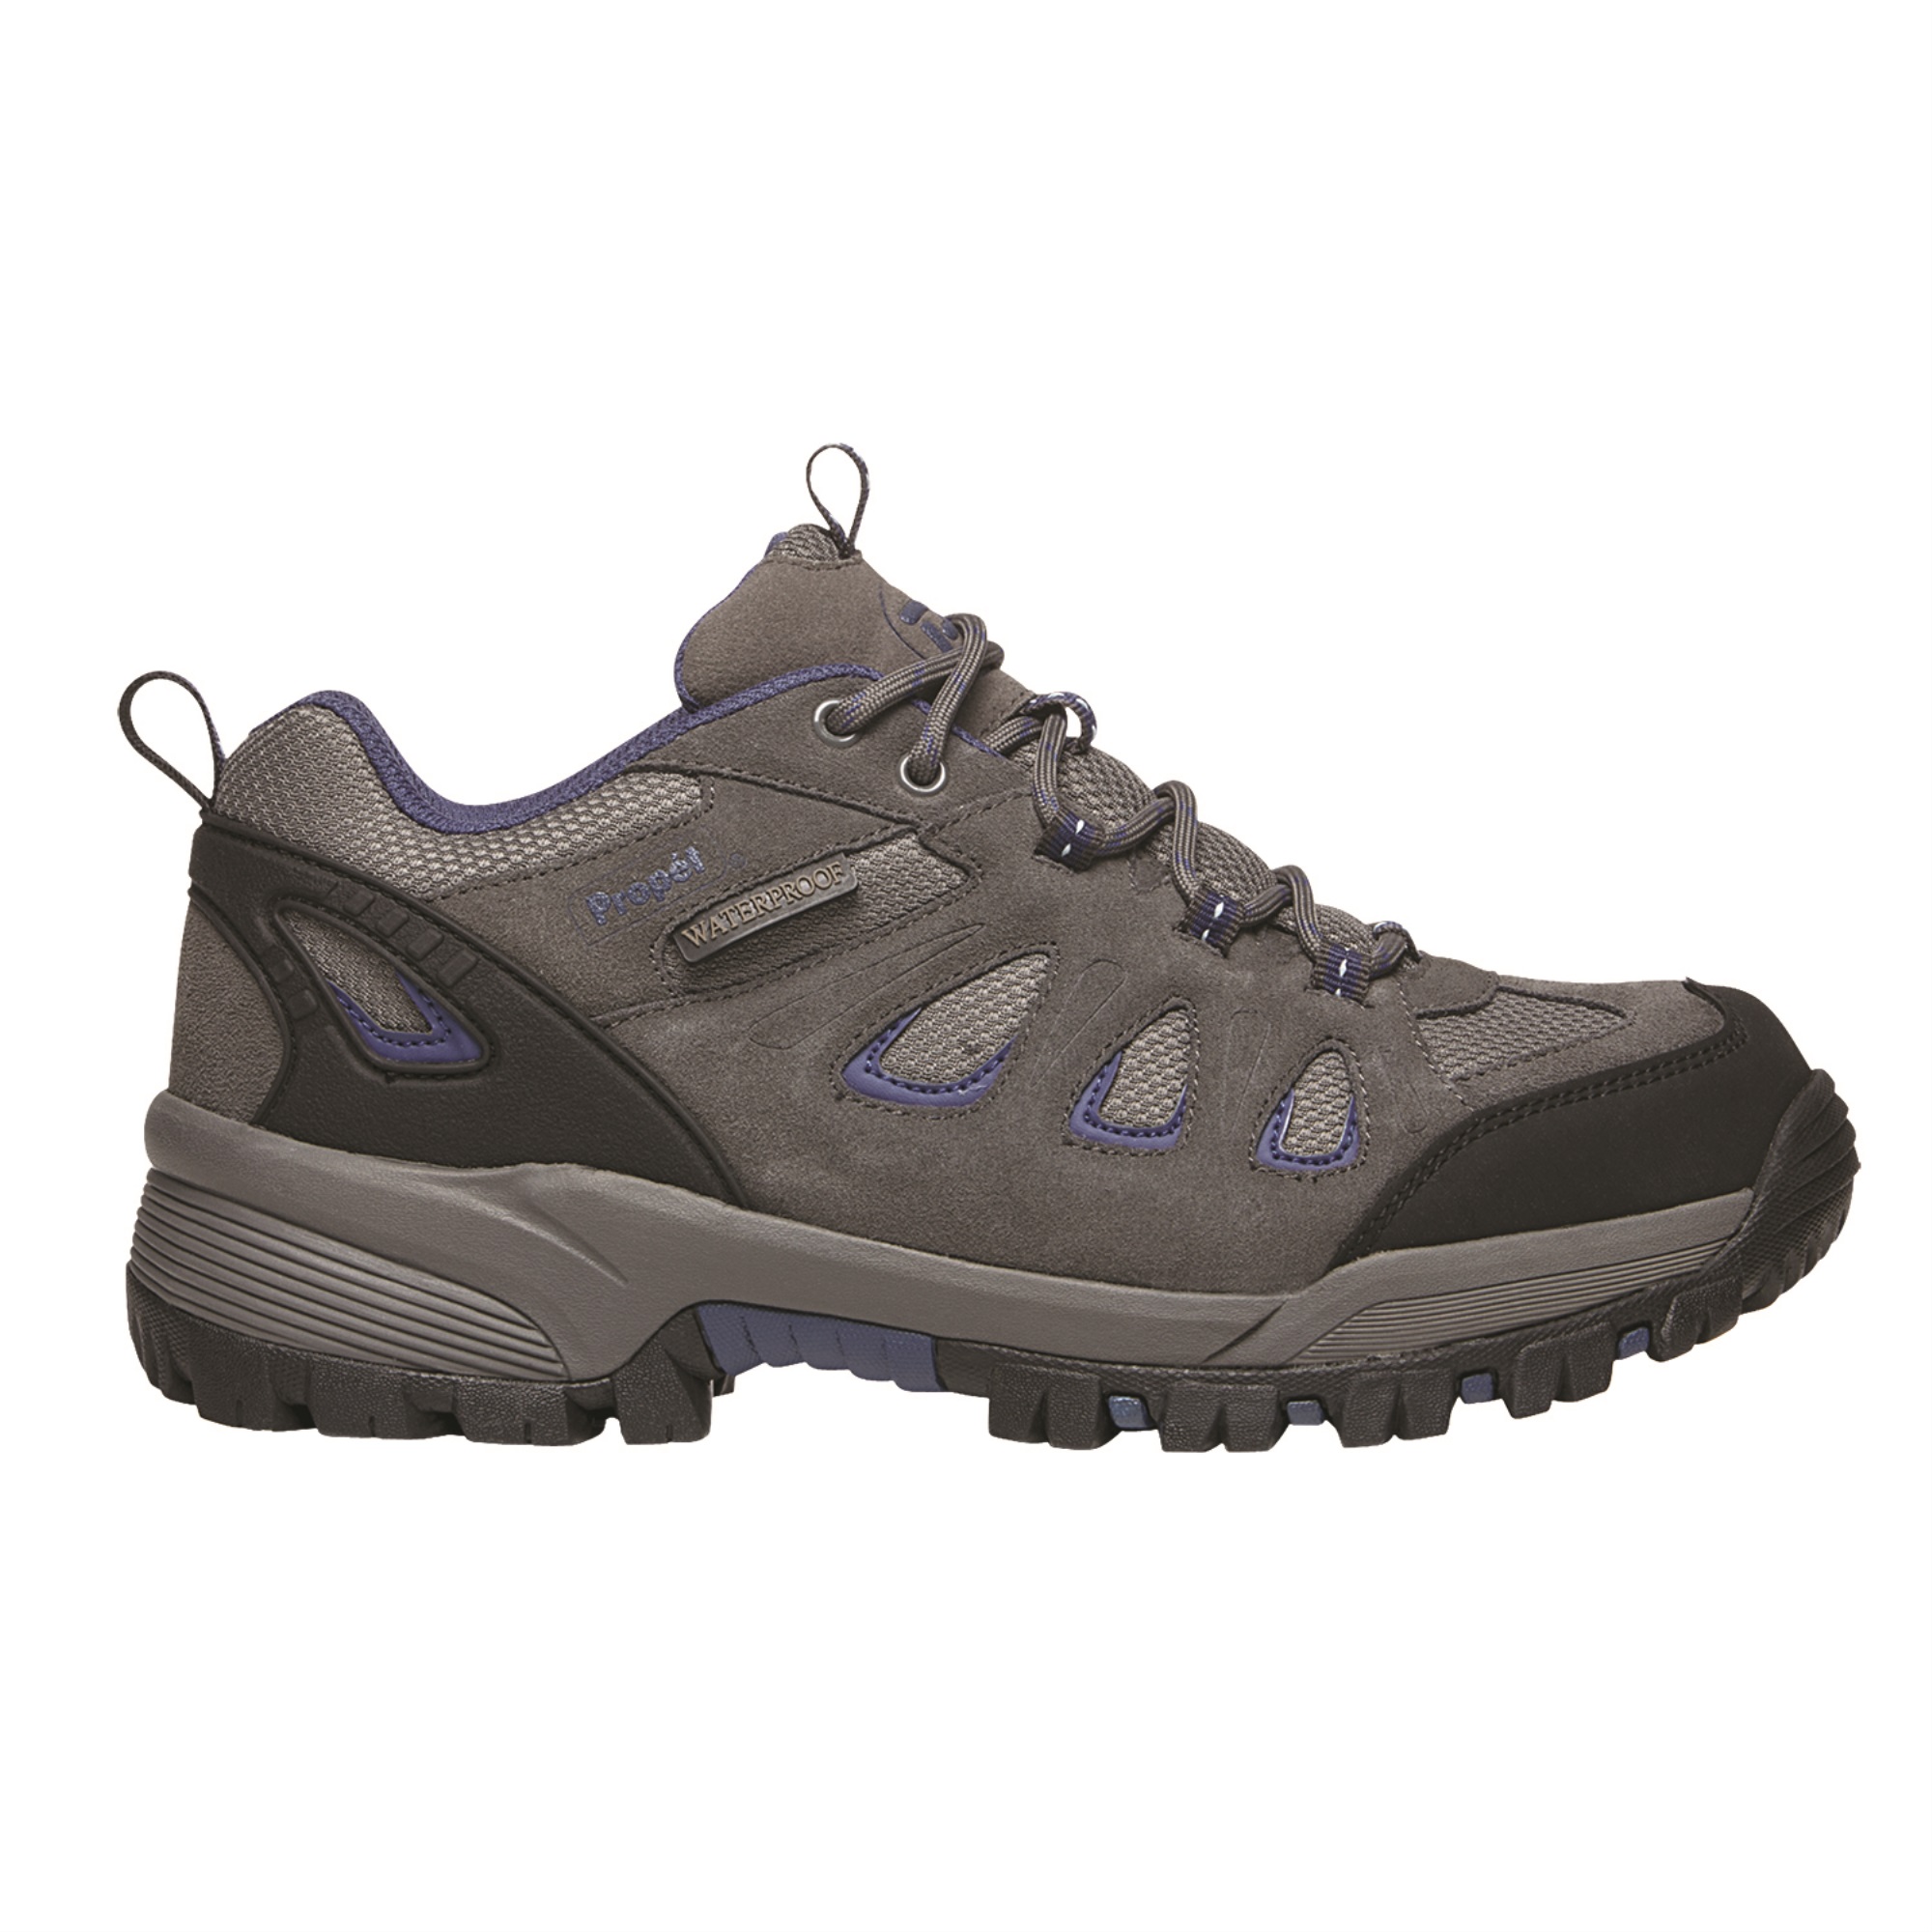 Men's Propet Ridge Walker Low Hiking Shoe - image 3 of 5